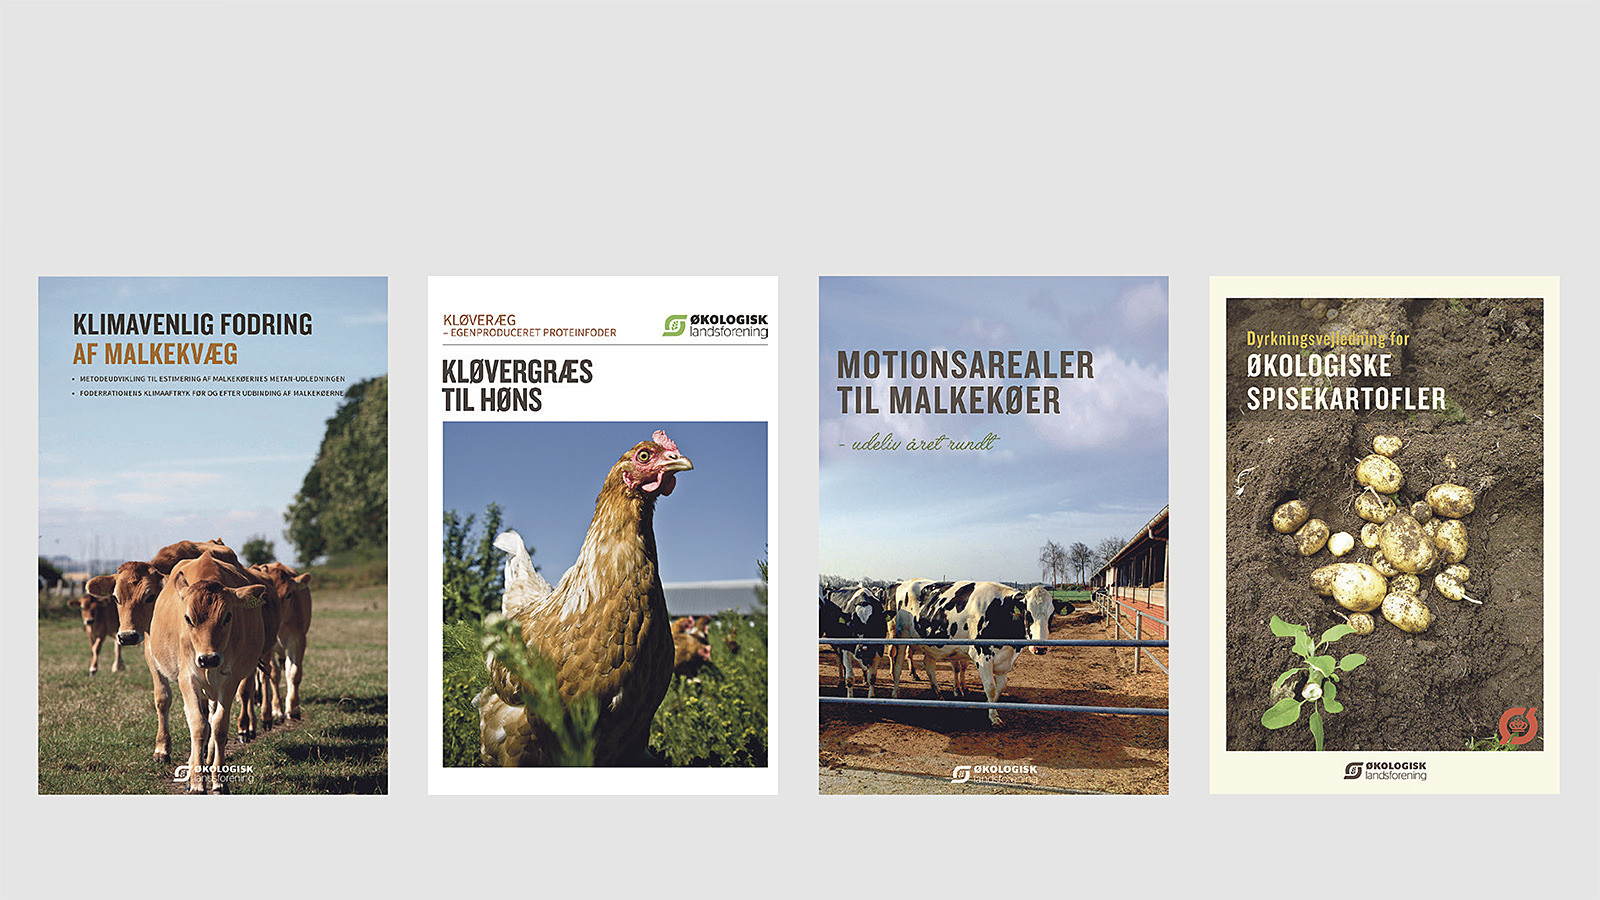 Fire kataloger fra Økologisk Landsforening ses på billedet